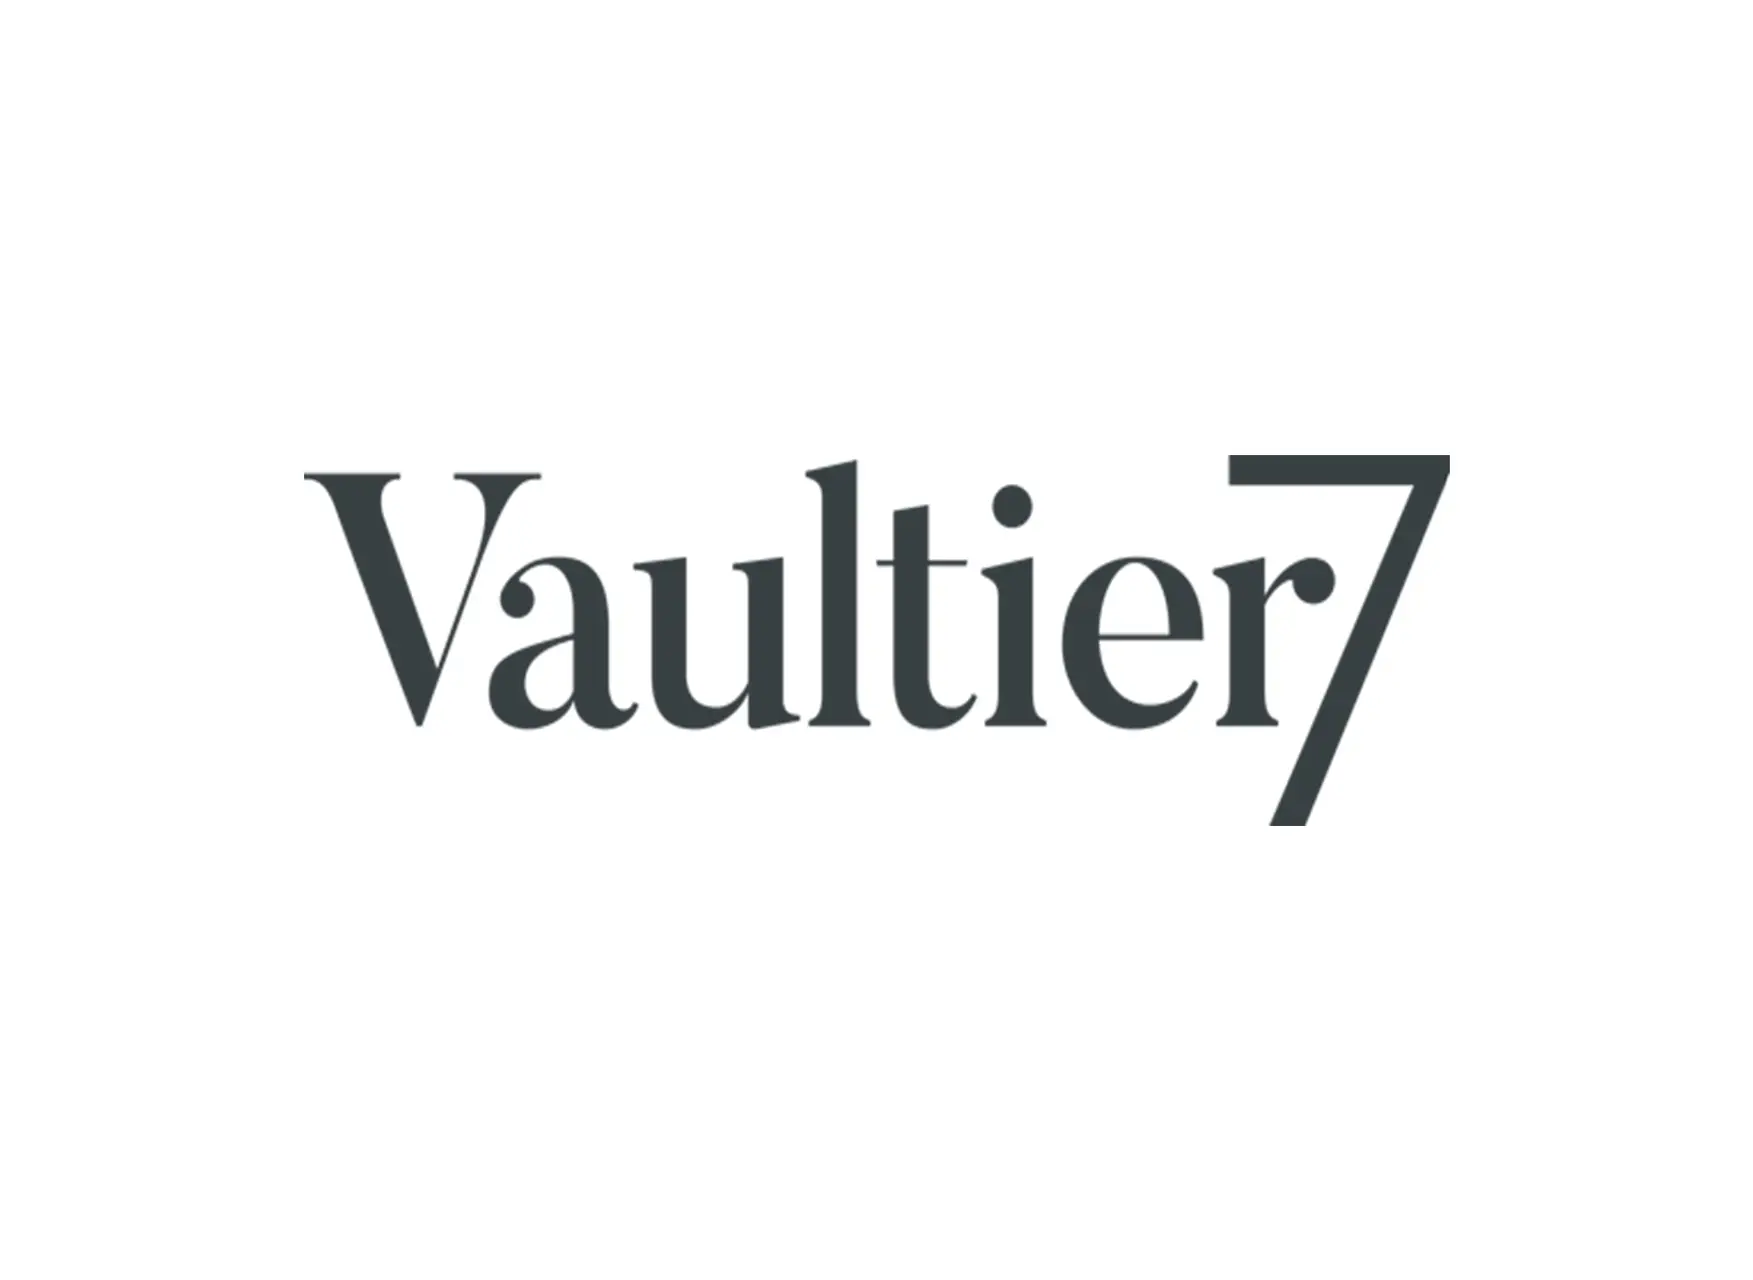 INVESTORS-Vaultier7-edito-1920x1280px.jpg